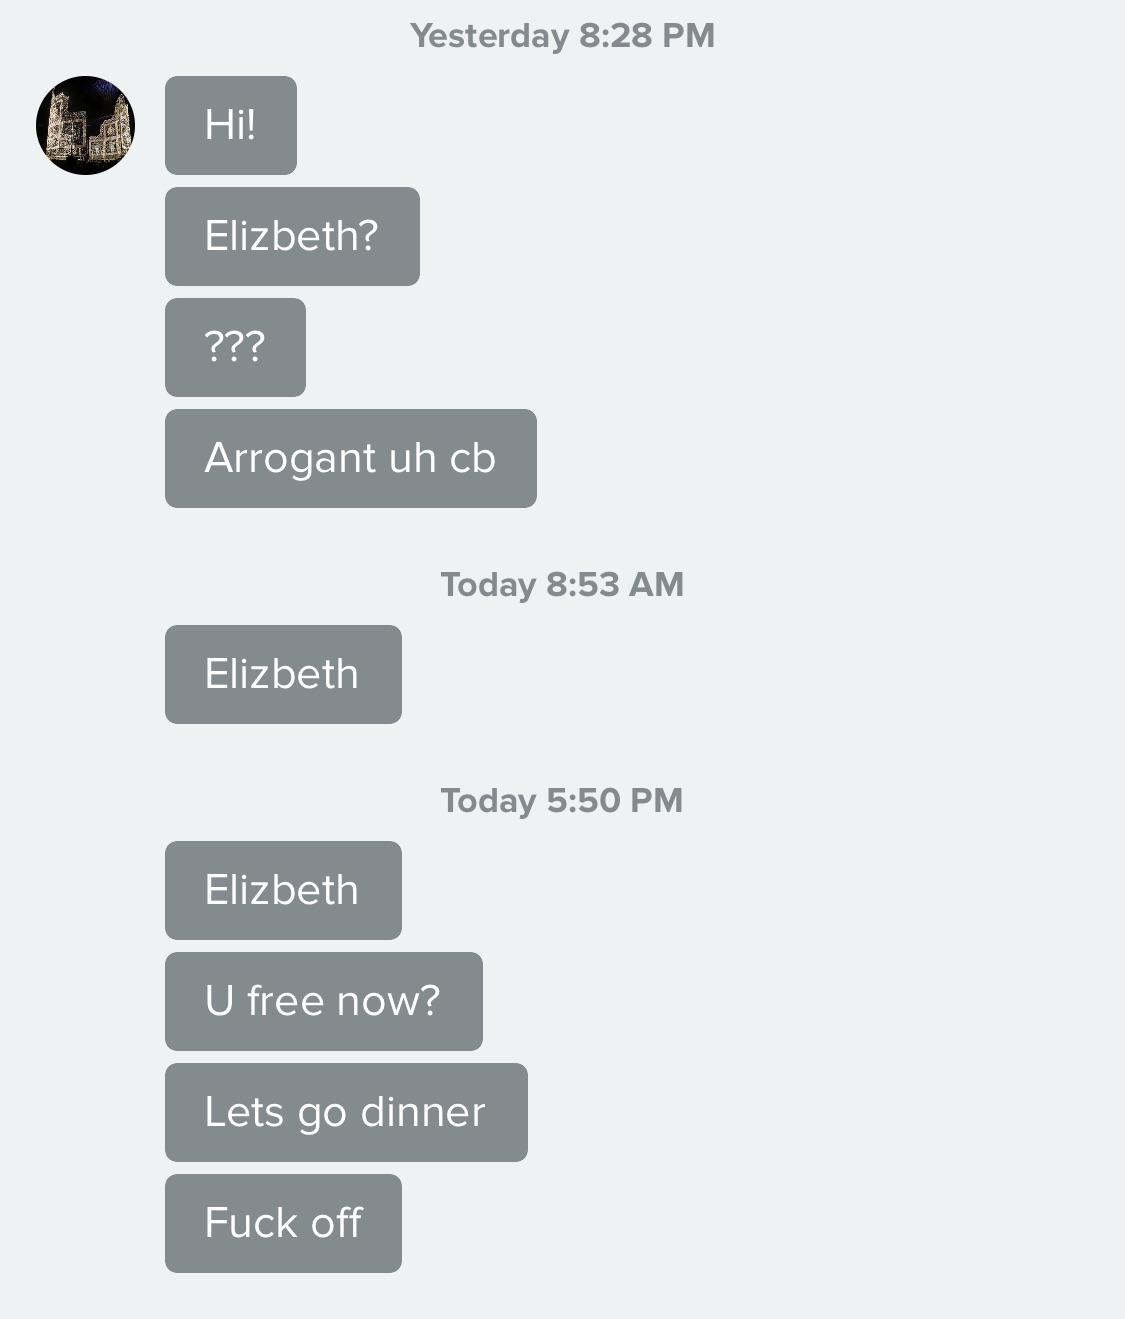 website - Yesterday Hi! Elizbeth? ??? Arrogant uh cb Today Elizbeth Today Elizbeth U free now? Lets go dinner Fuck off